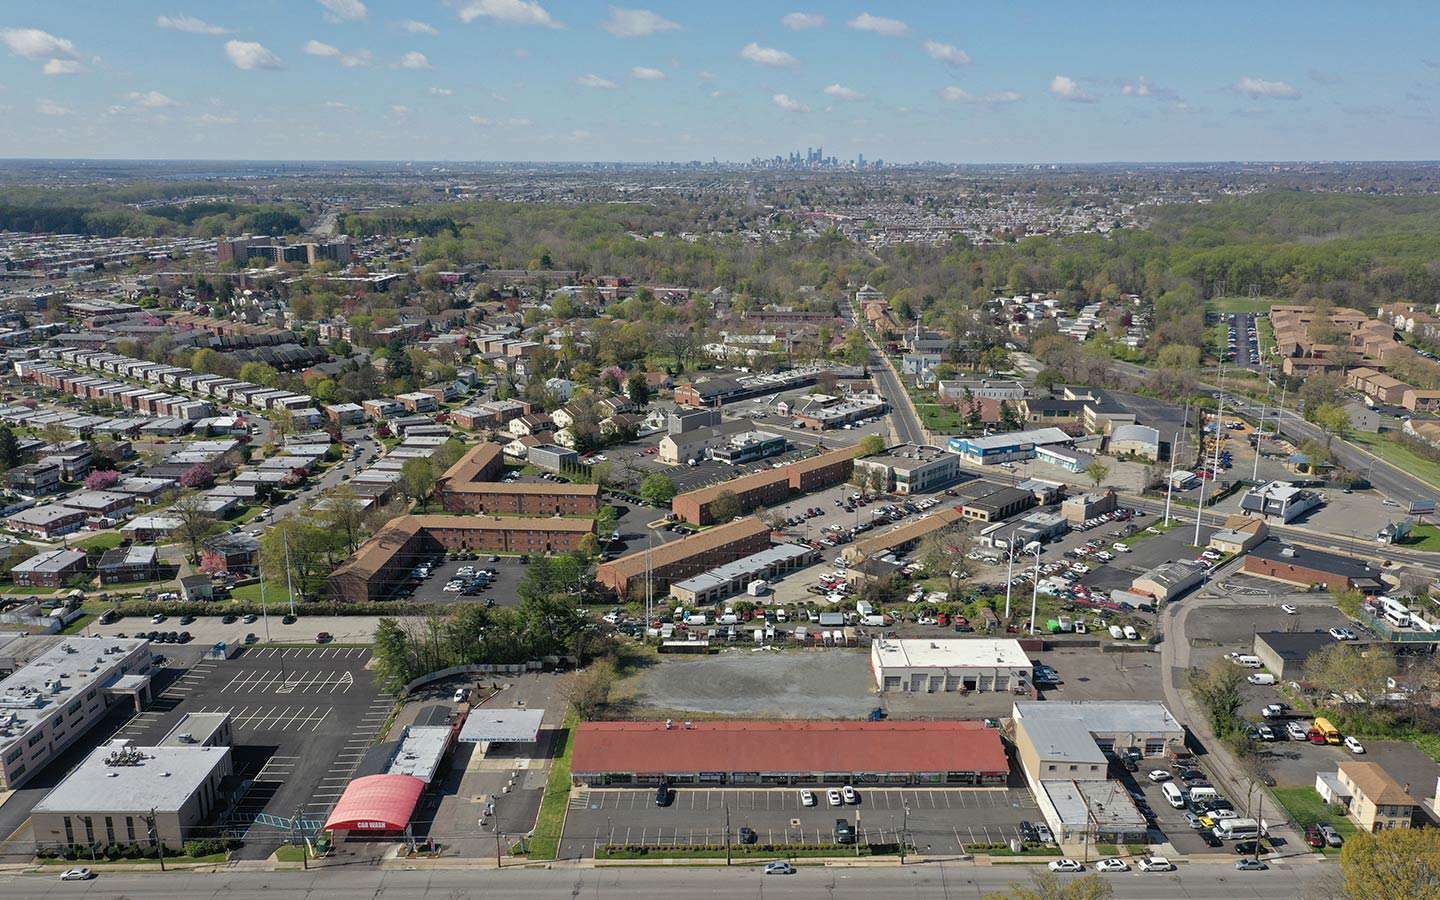 Aerial photo of a neighborhood in Northeast Philadelphia